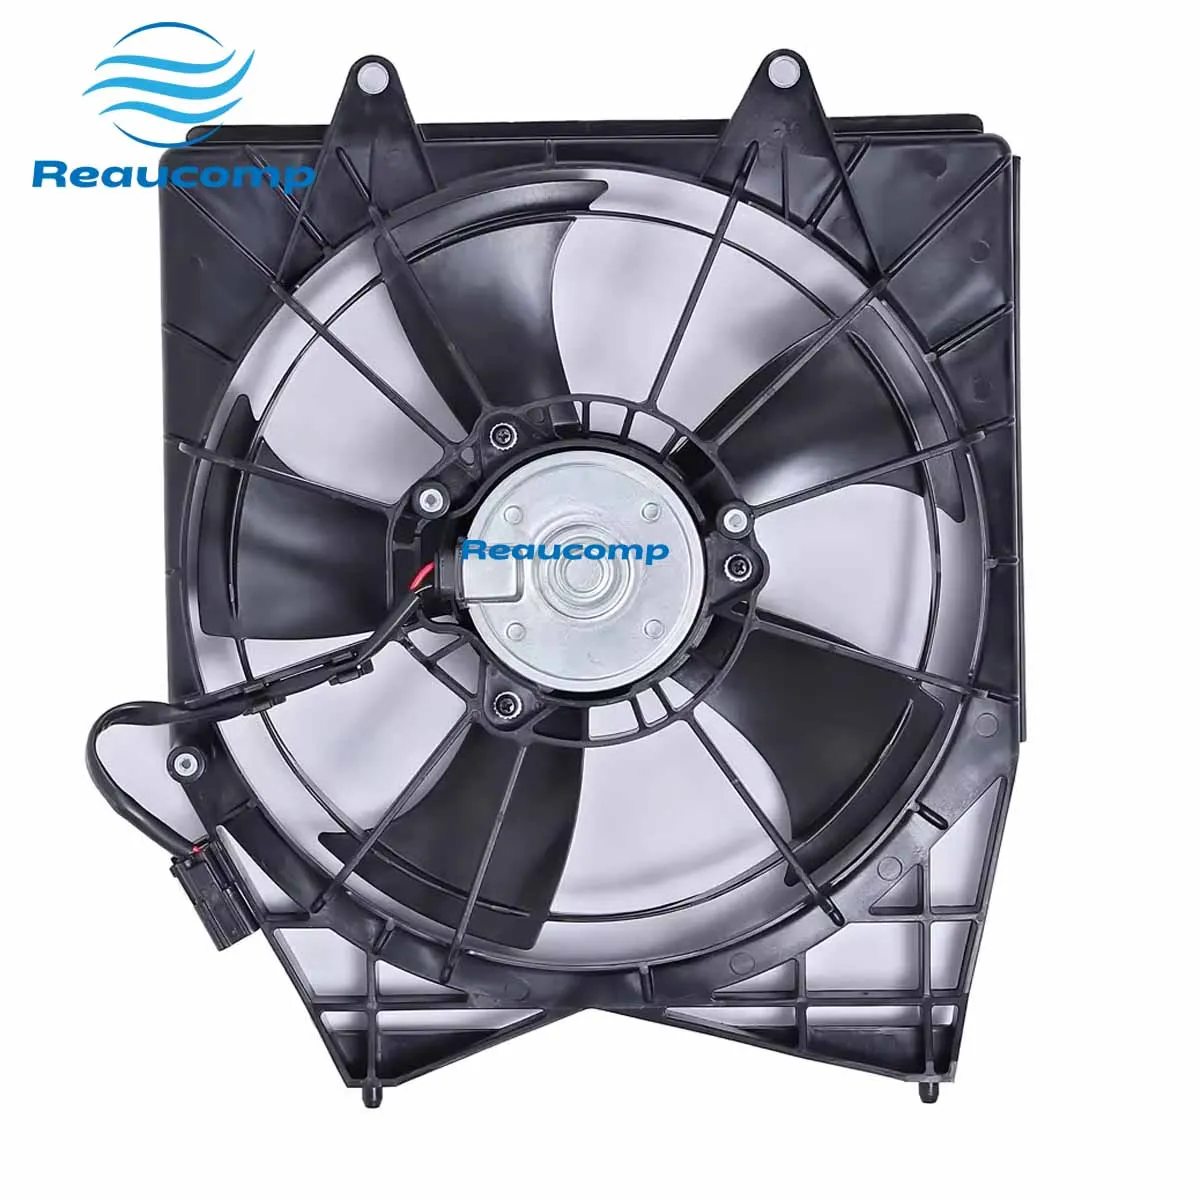 

19015-6A0-A01 19030-5PF-N12 HO3115172 190156A0999 Cooling Radiator Electric Fan for HONDA ACCORD CV1 1.5T 2.0L 2018 2019 2020